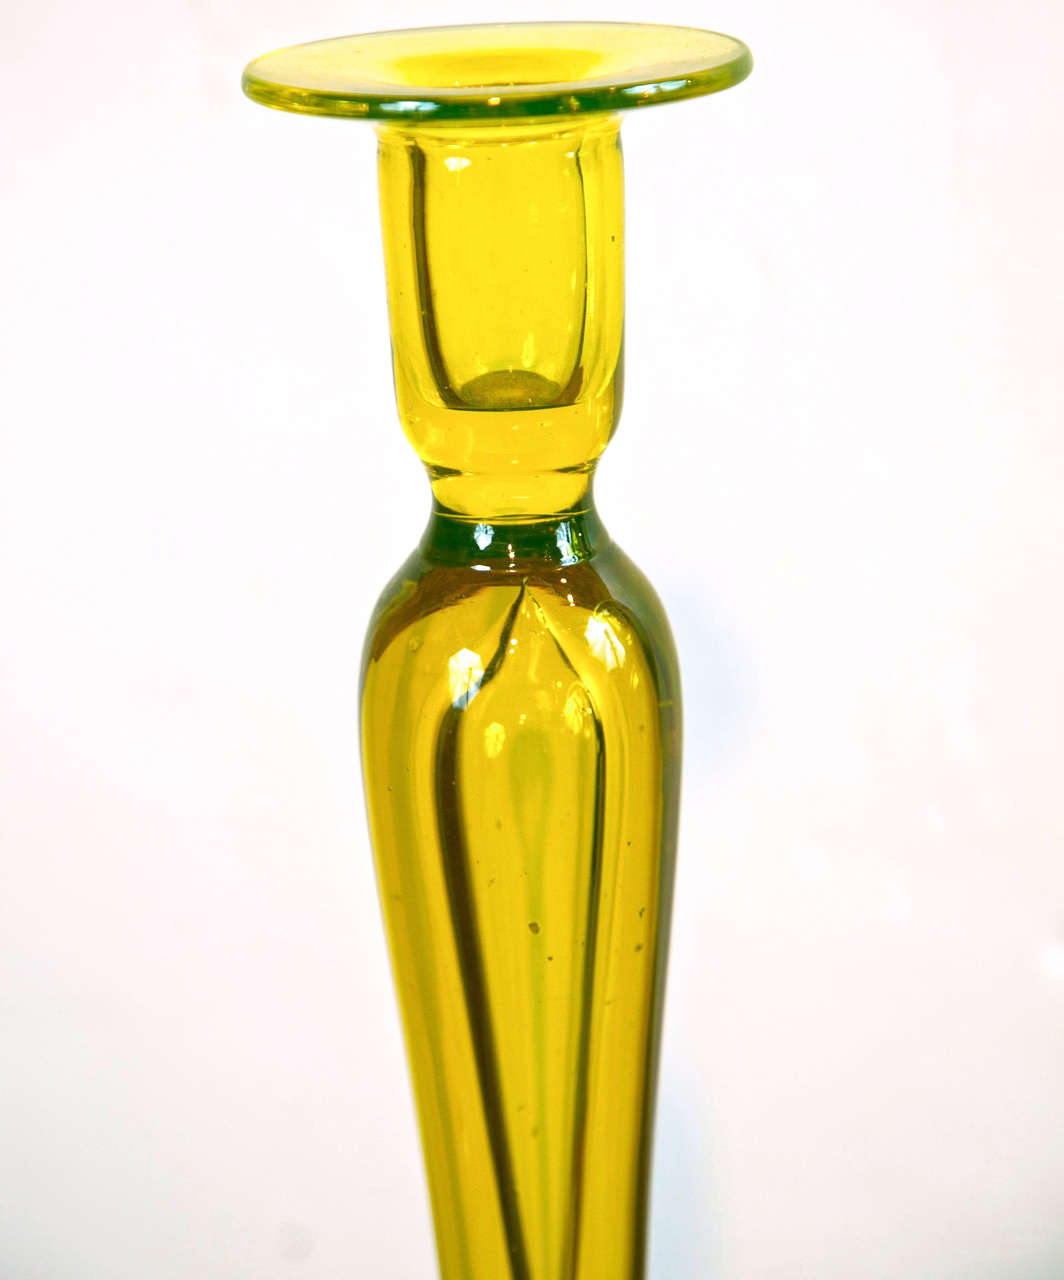 Pair of Rare Yellow Vaseline Handblown Glass Candlesticks at 1stdibs